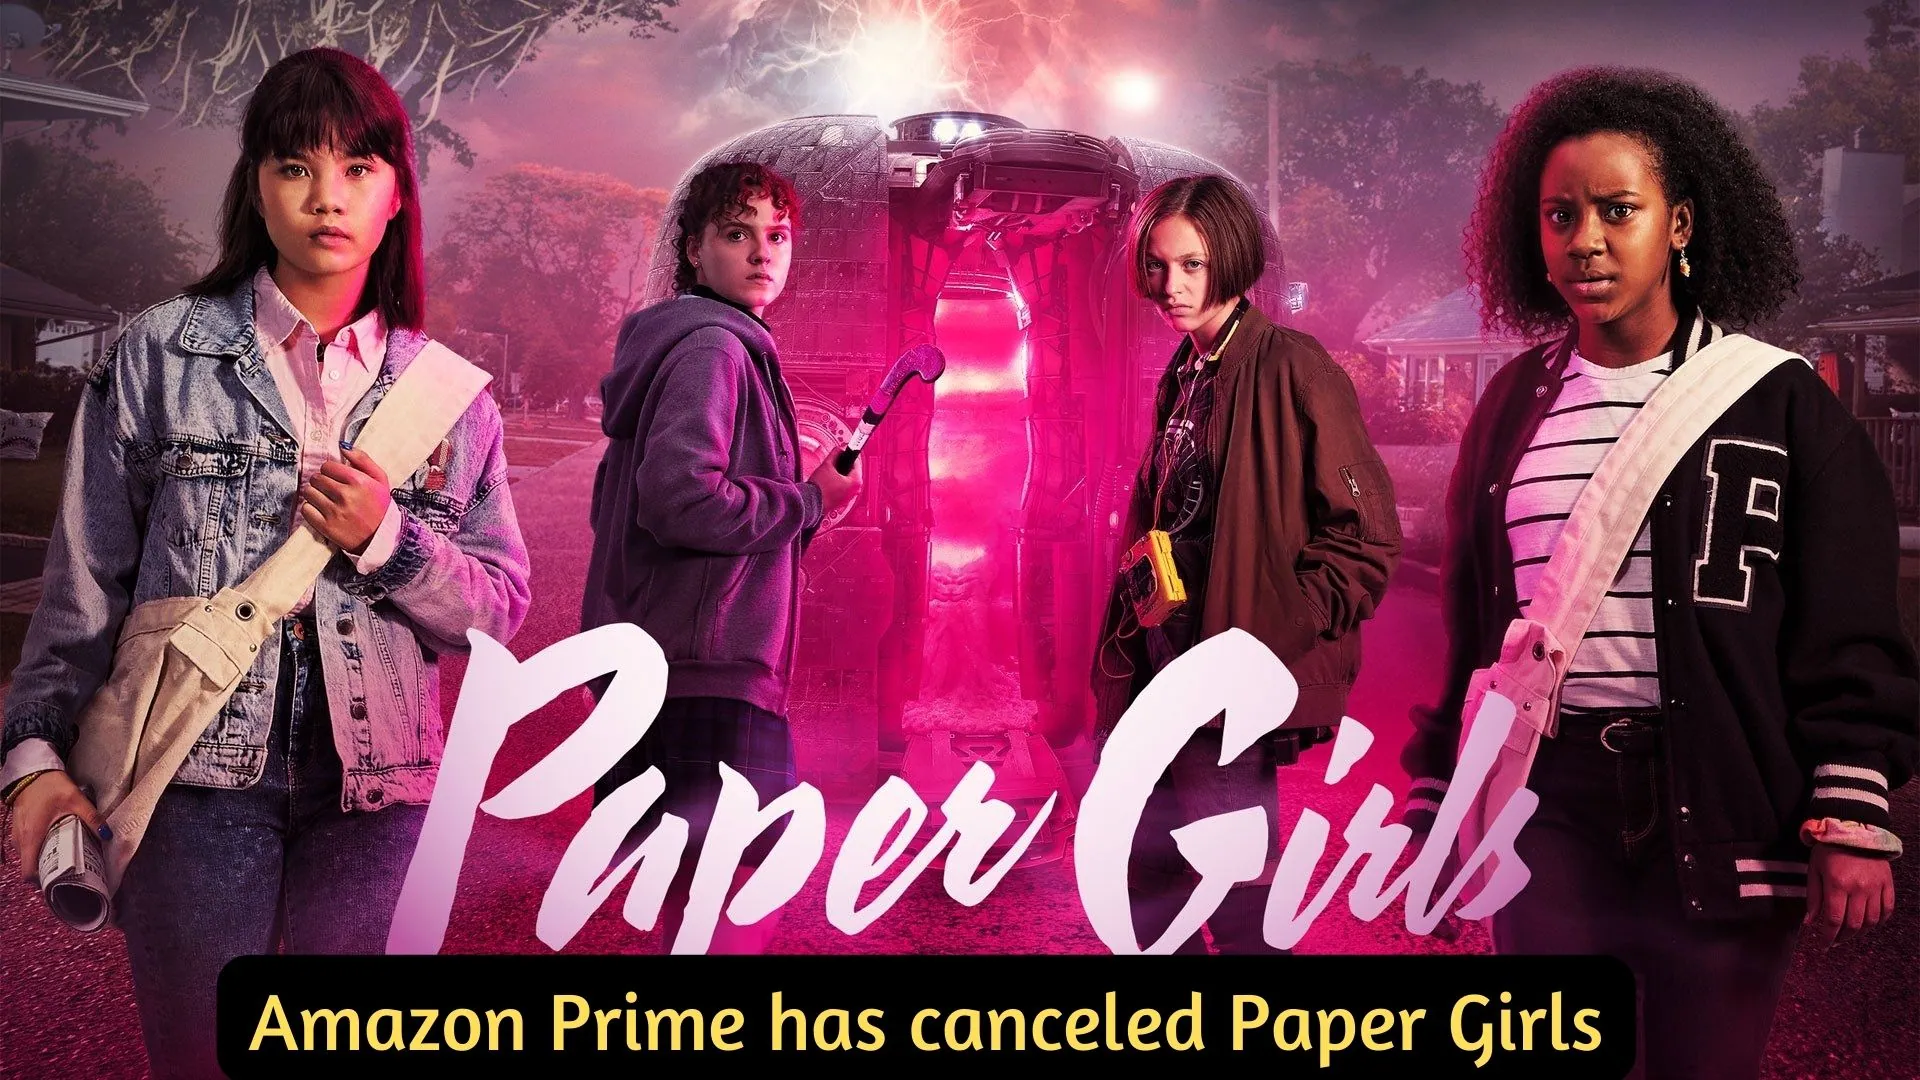 Amazon Prime has canceled Paper Girls